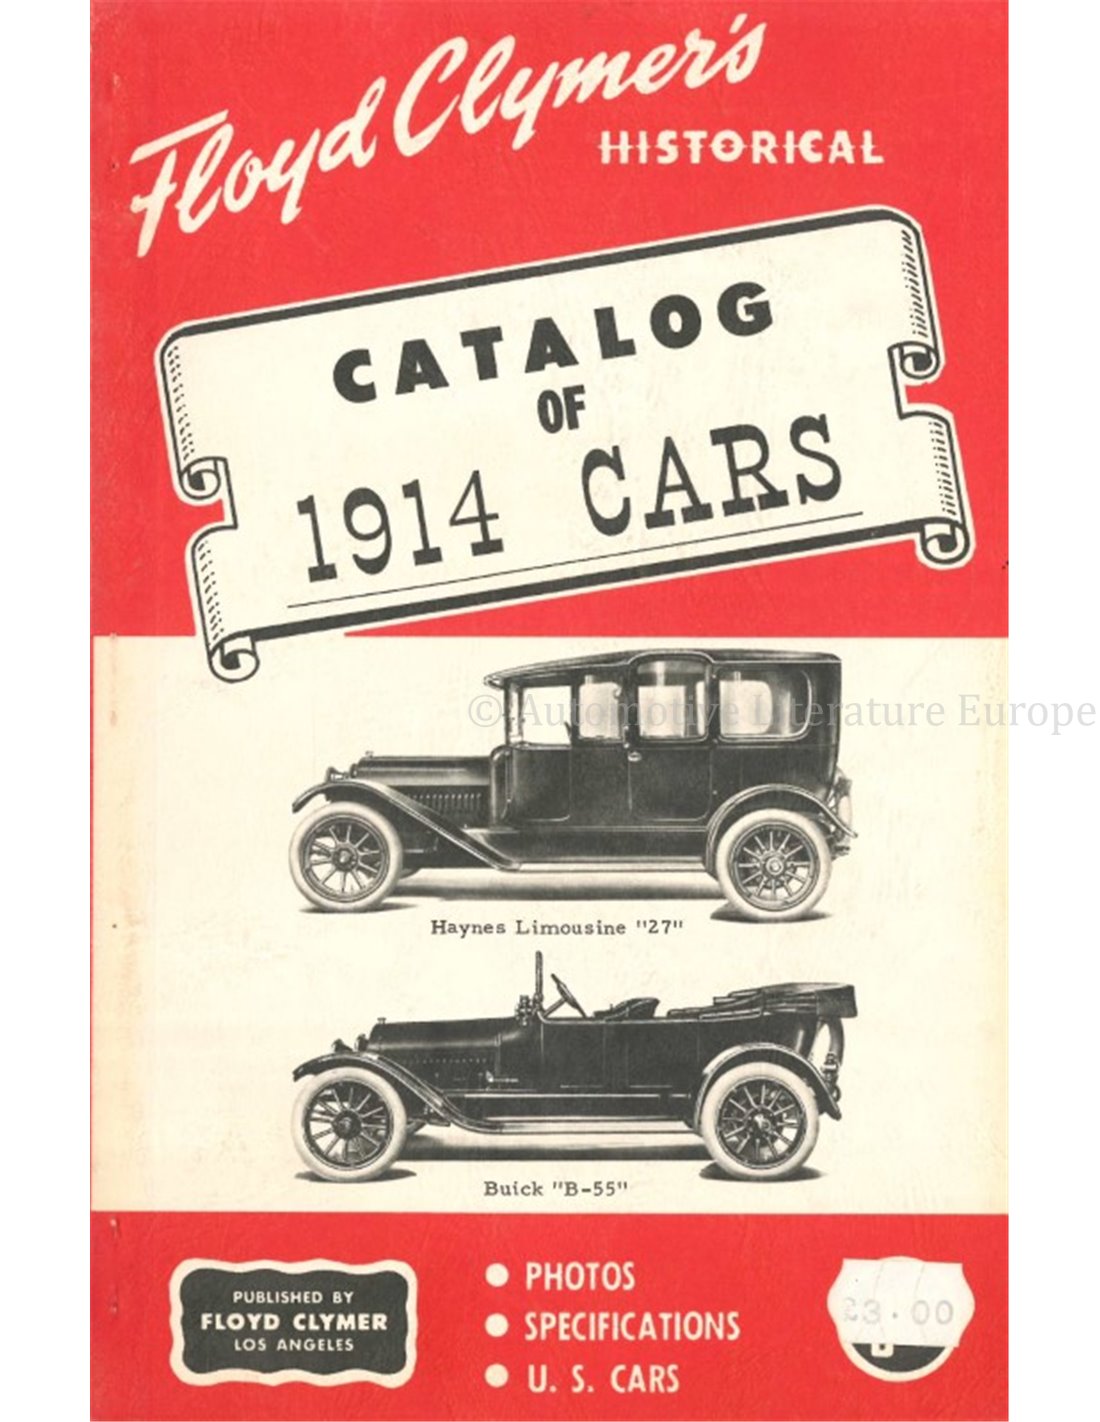 FLOYD CLYMER'S HISTORICAL CATALOG OF 1914 CARS